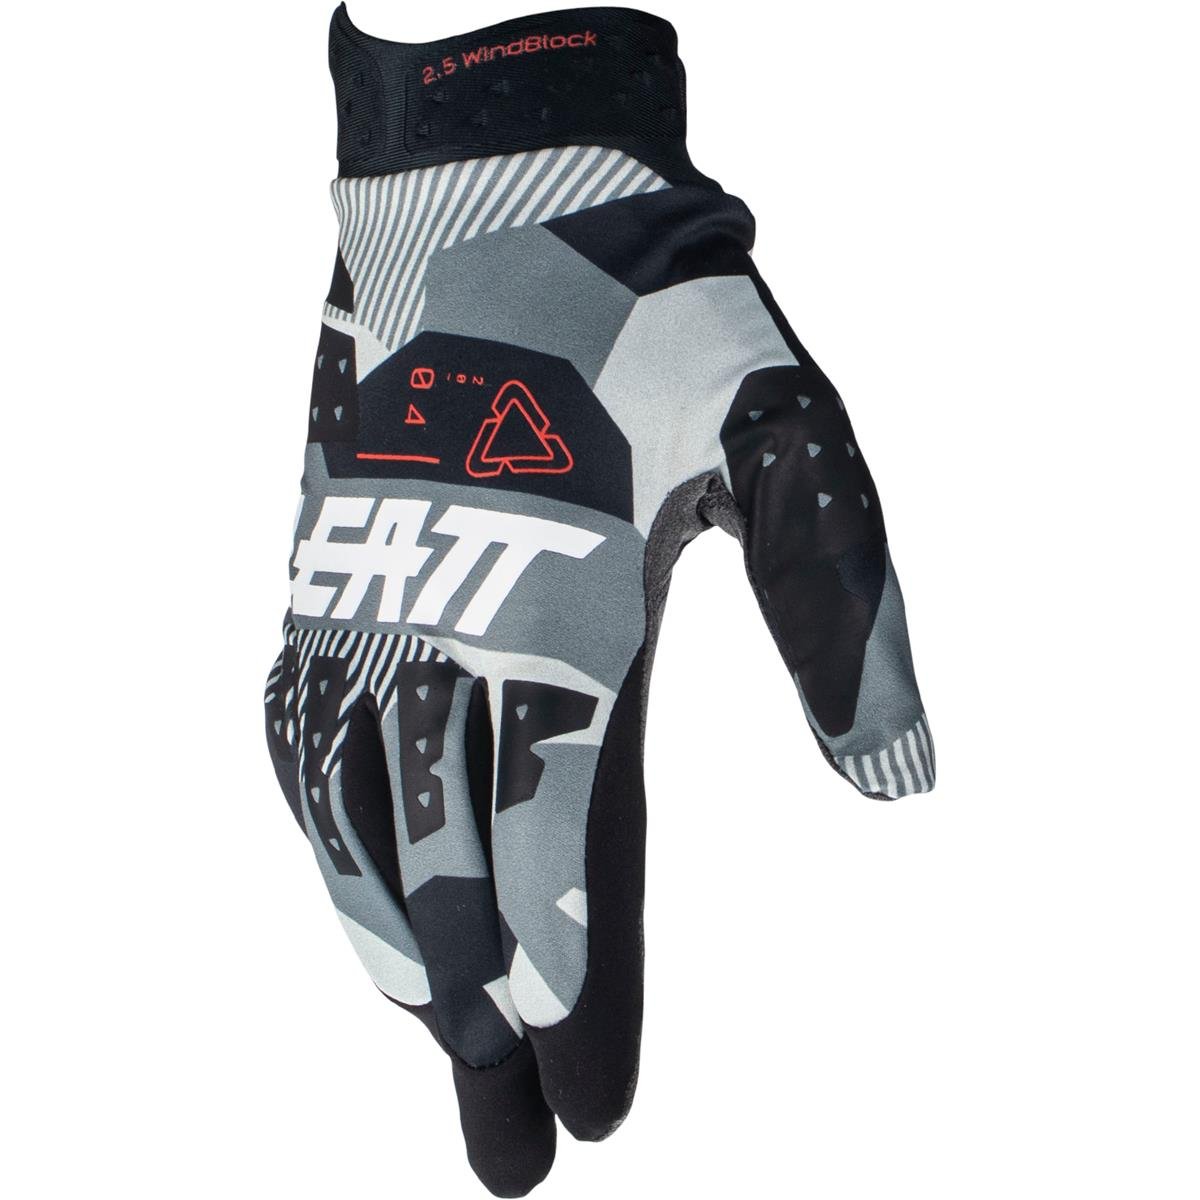 Leatt Gloves Moto 2.5 Windblock Grey/Black/White